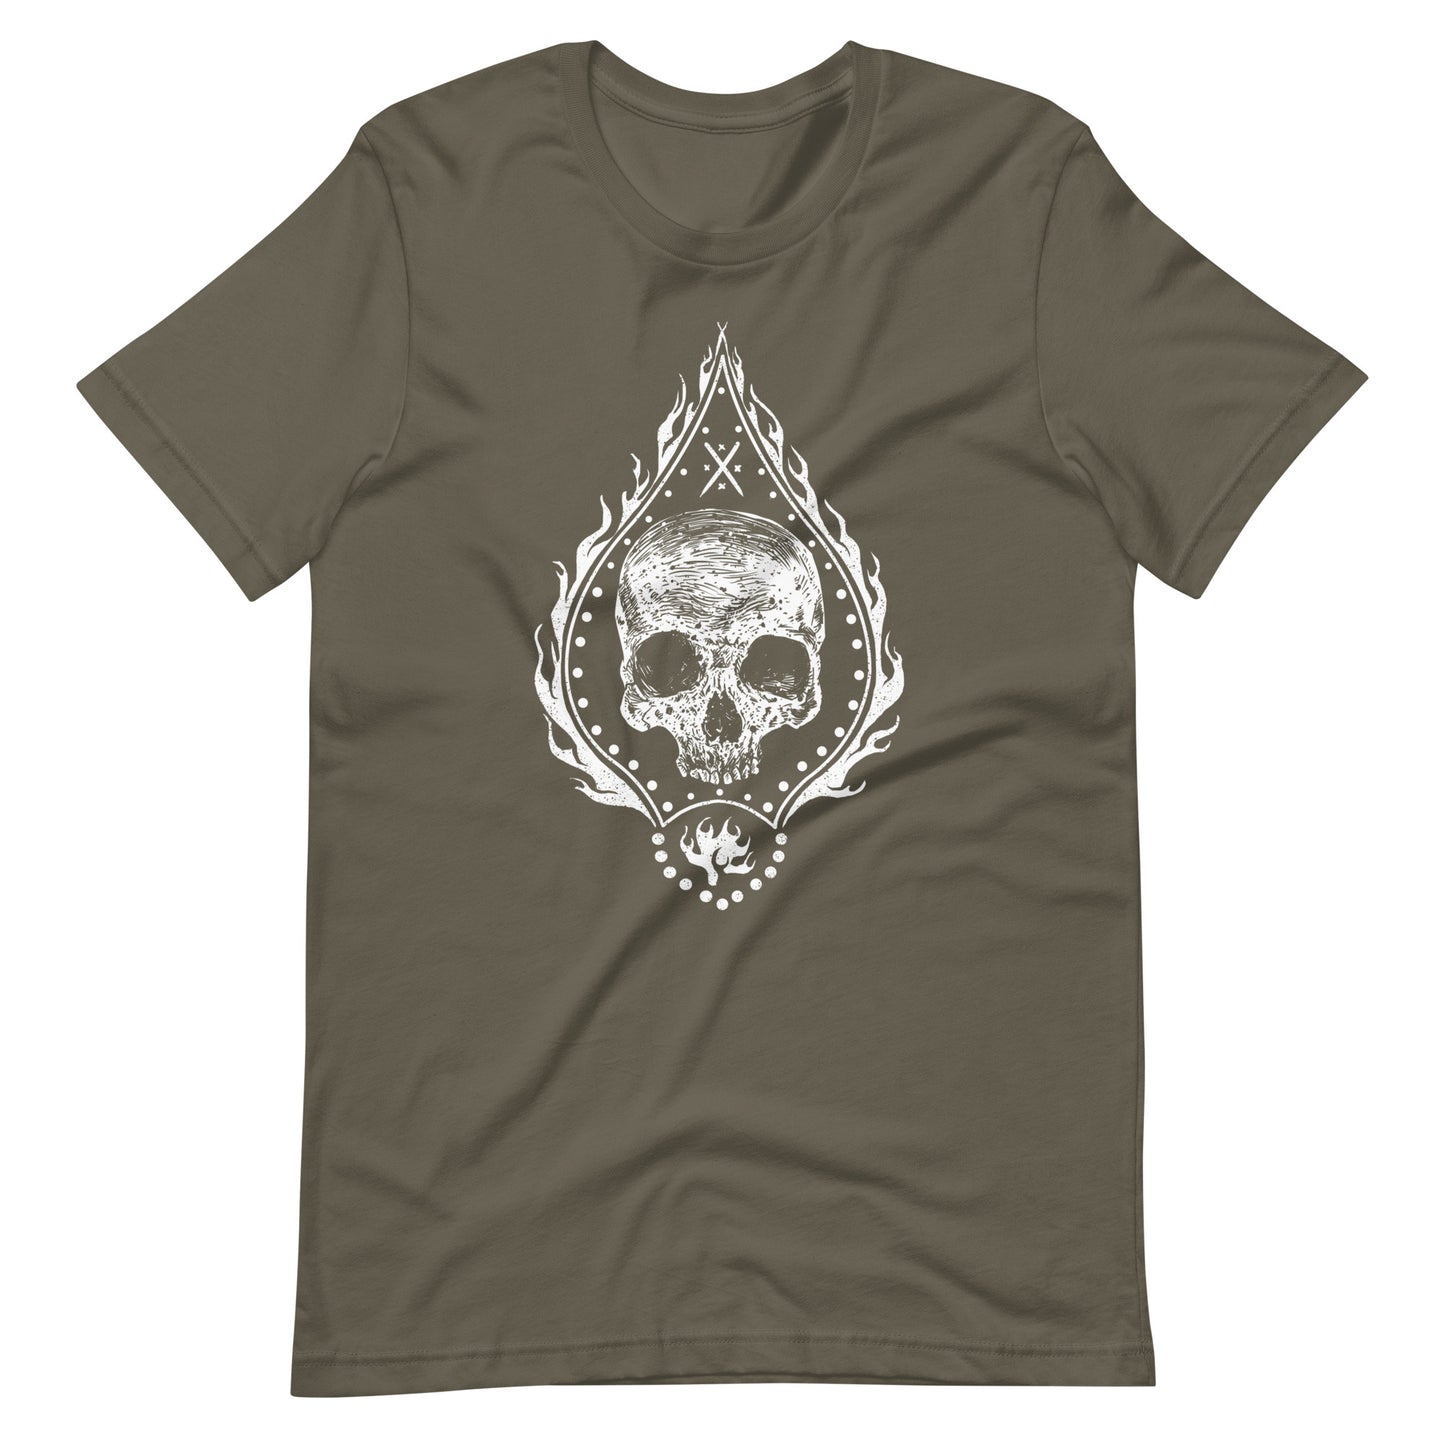 Fire Skull White - Men's t-shirt - Army Front